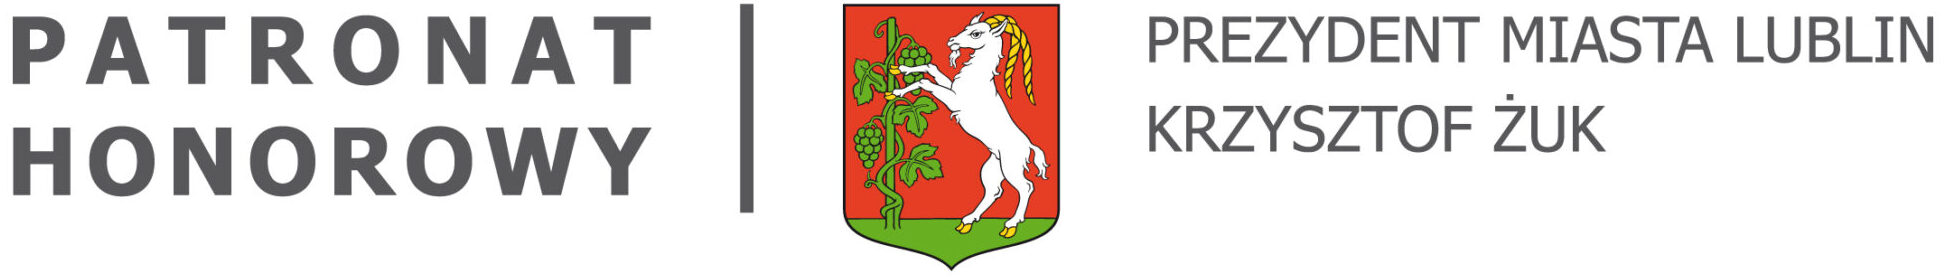 Patronat Honorowy Prezydenta Miasta Lublin